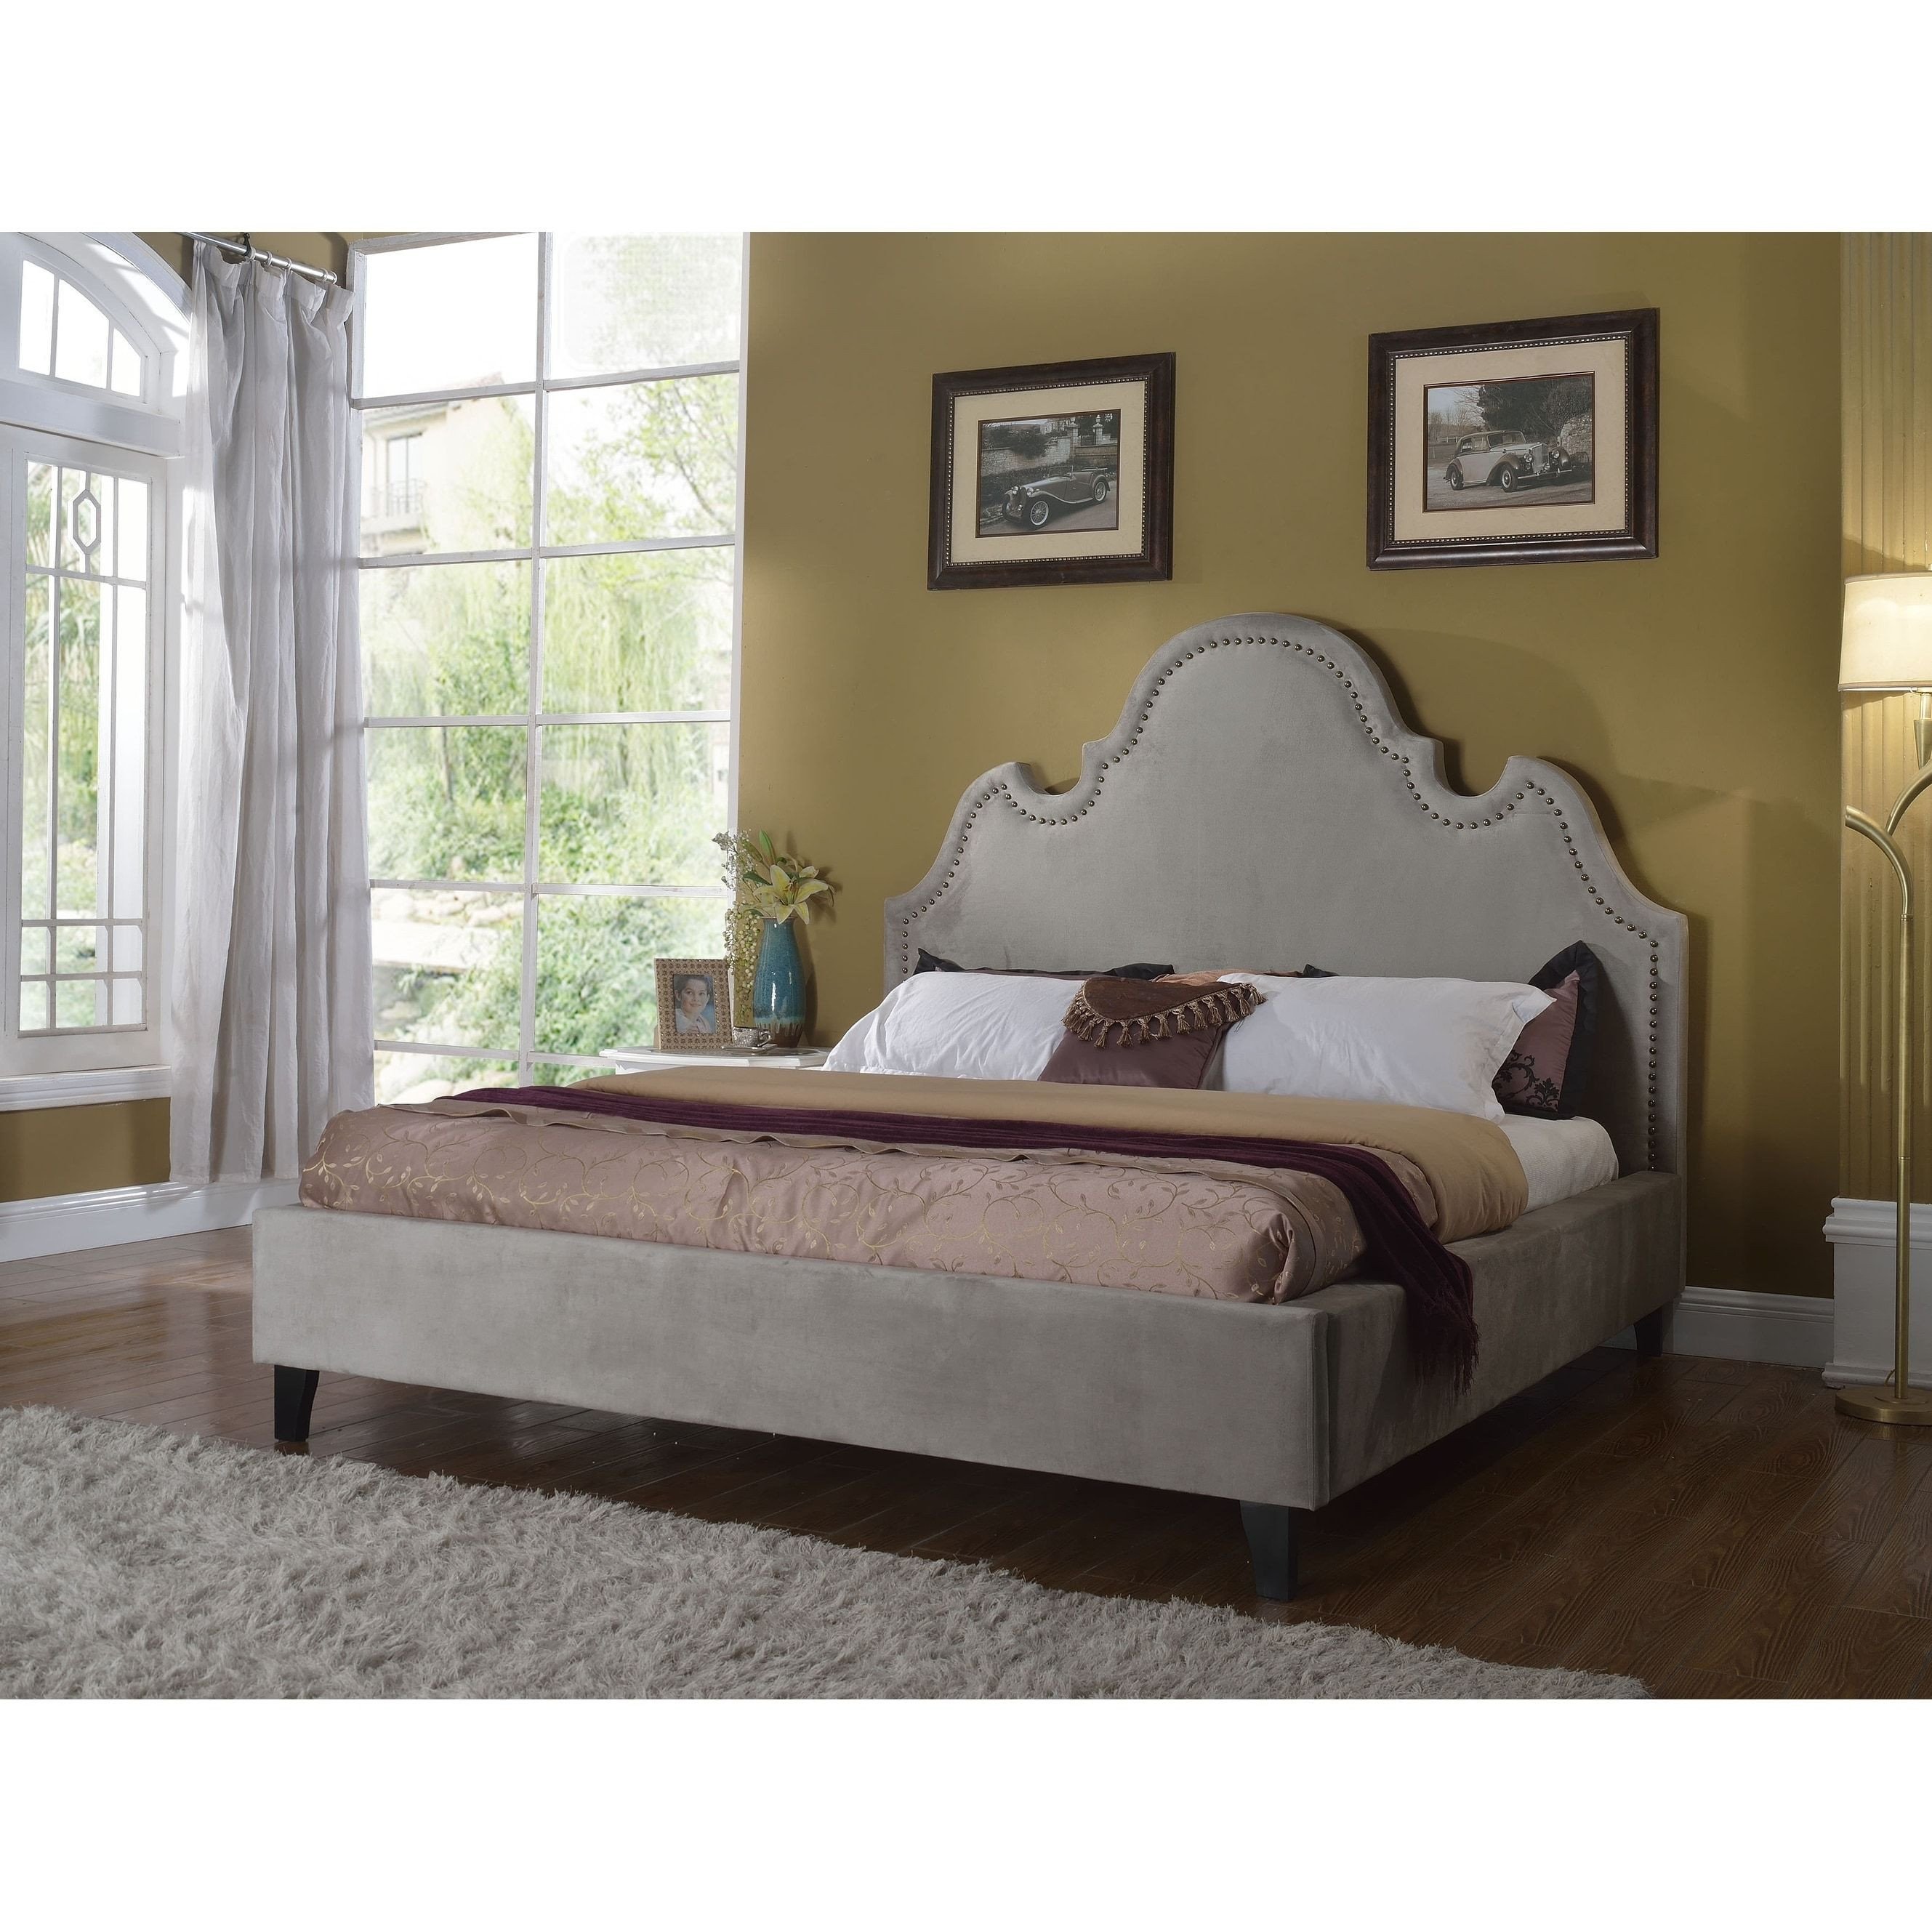 High Quality Bedroom Furniture Lovely Best Master Furniture Gray Upholstered Platform Bed Queen